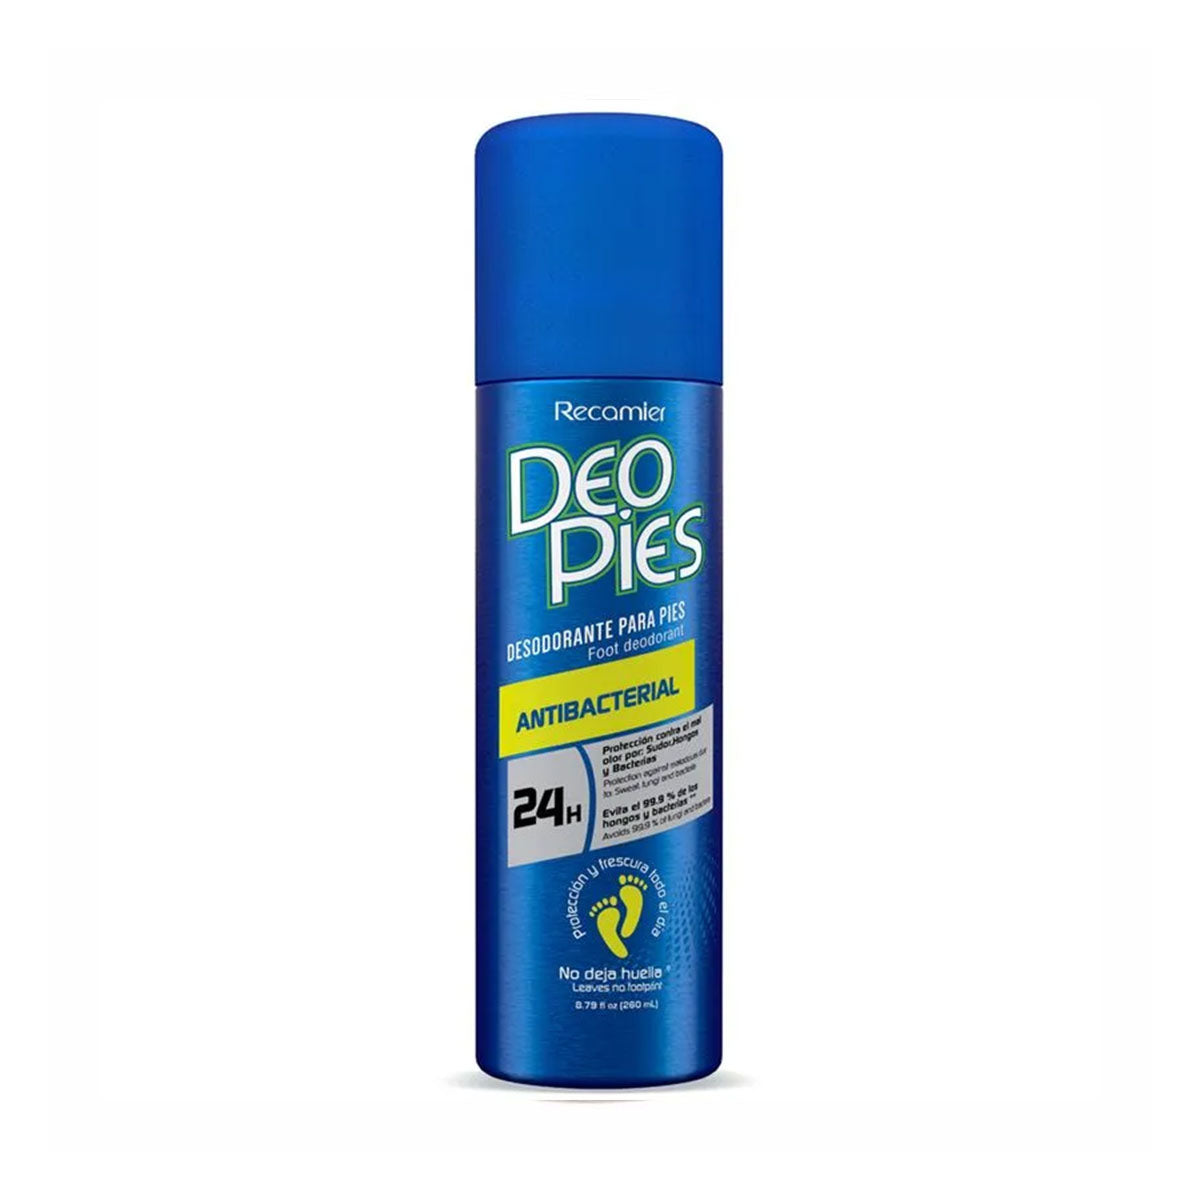 Desodorante en aerosol para pies Deo Pies Antibacterial 24h Recamier 260 ml